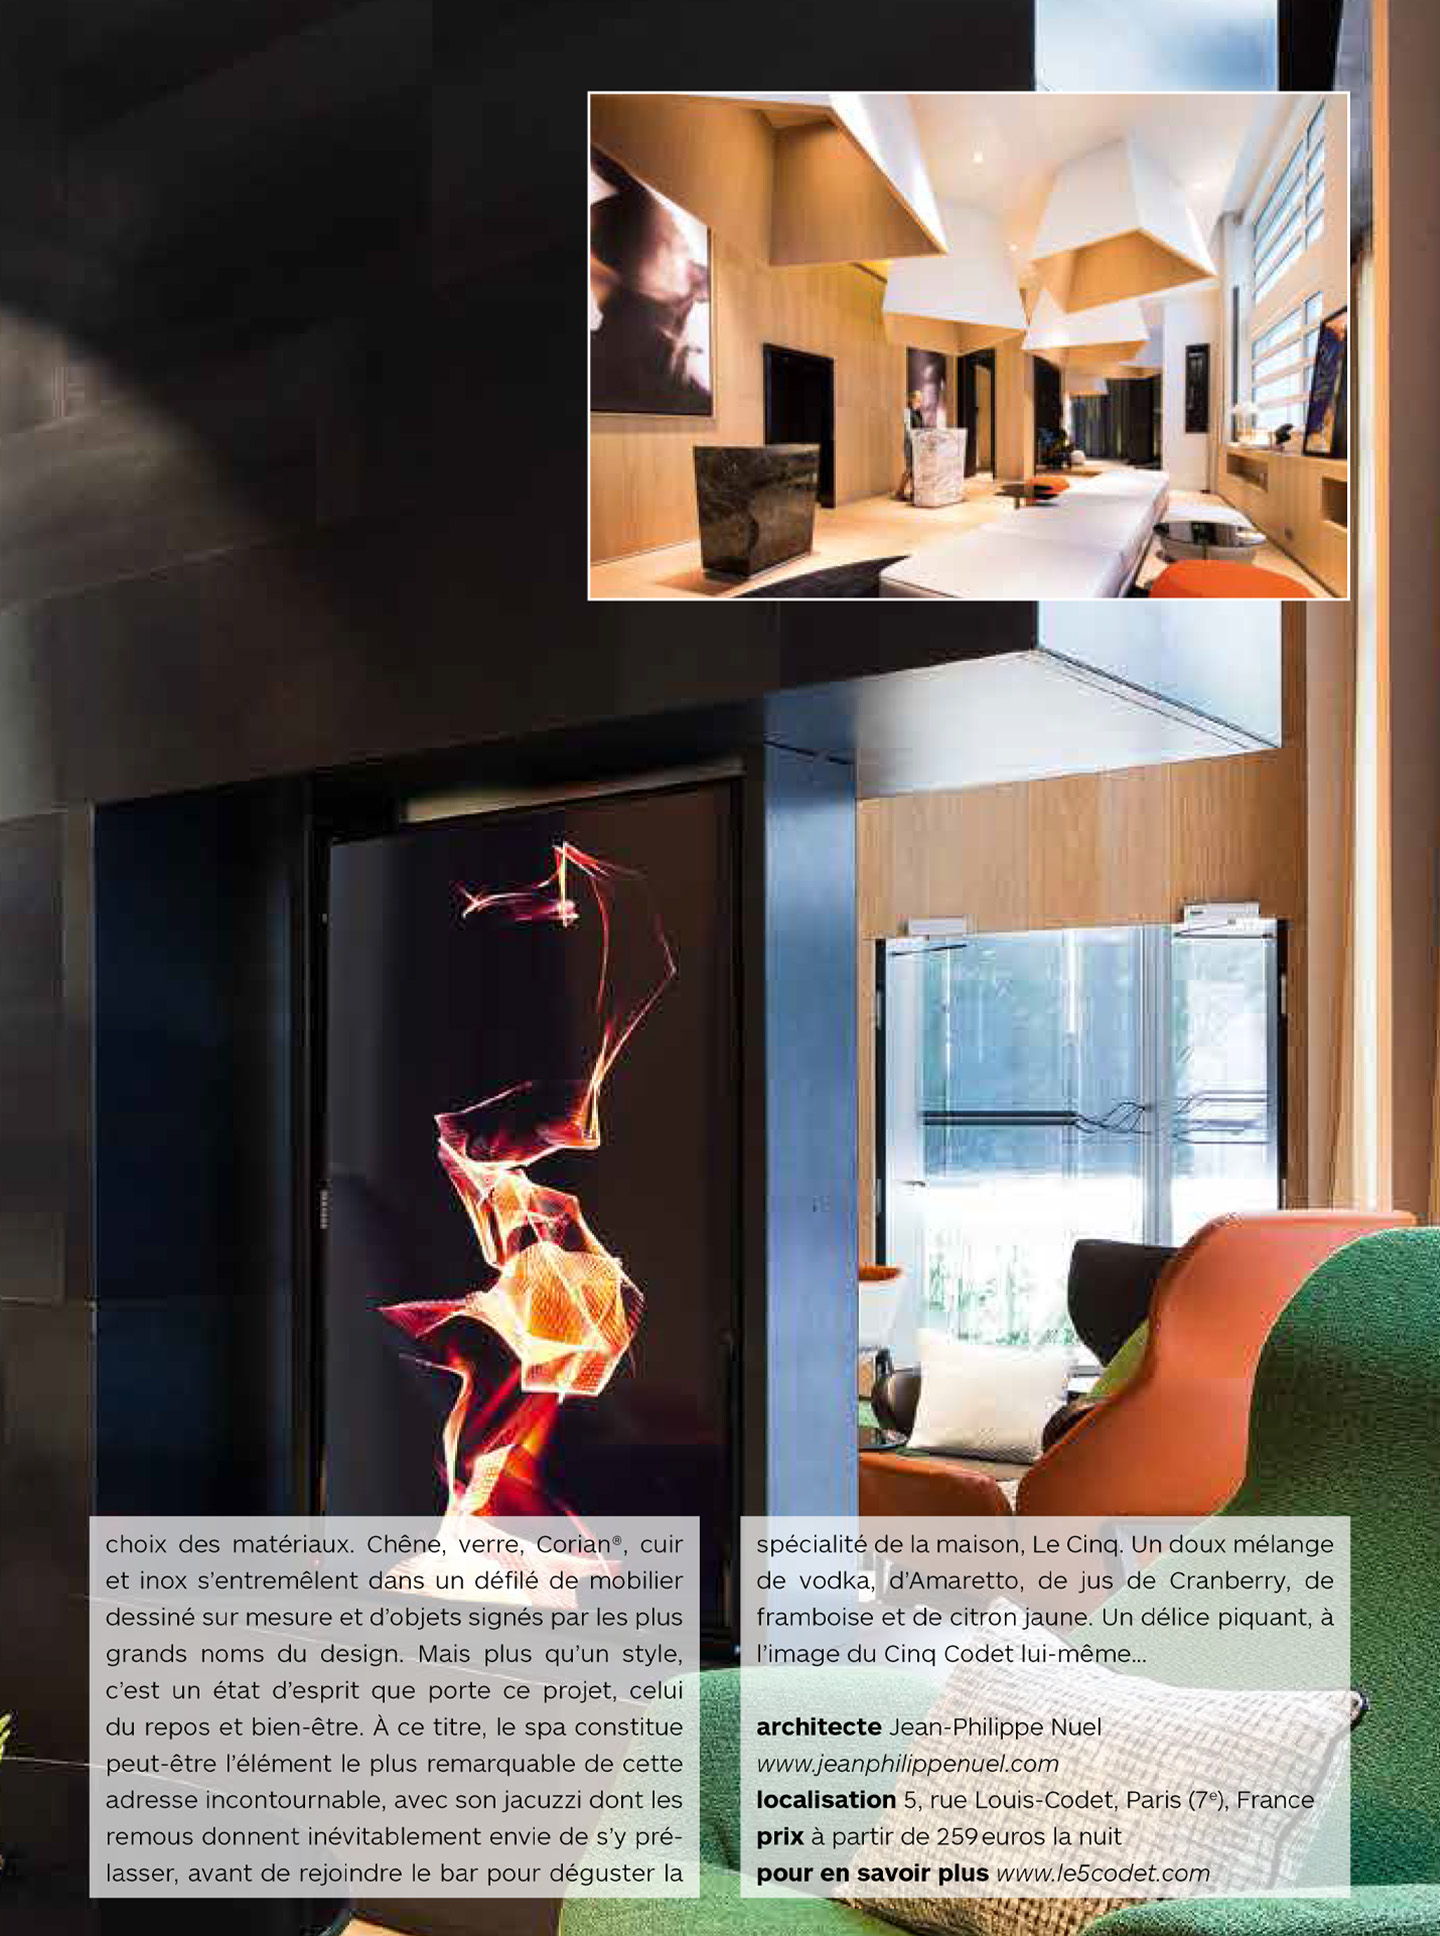 article on the parisian hotel le cinq codet designed by the interior design studio jean-philippe nuel